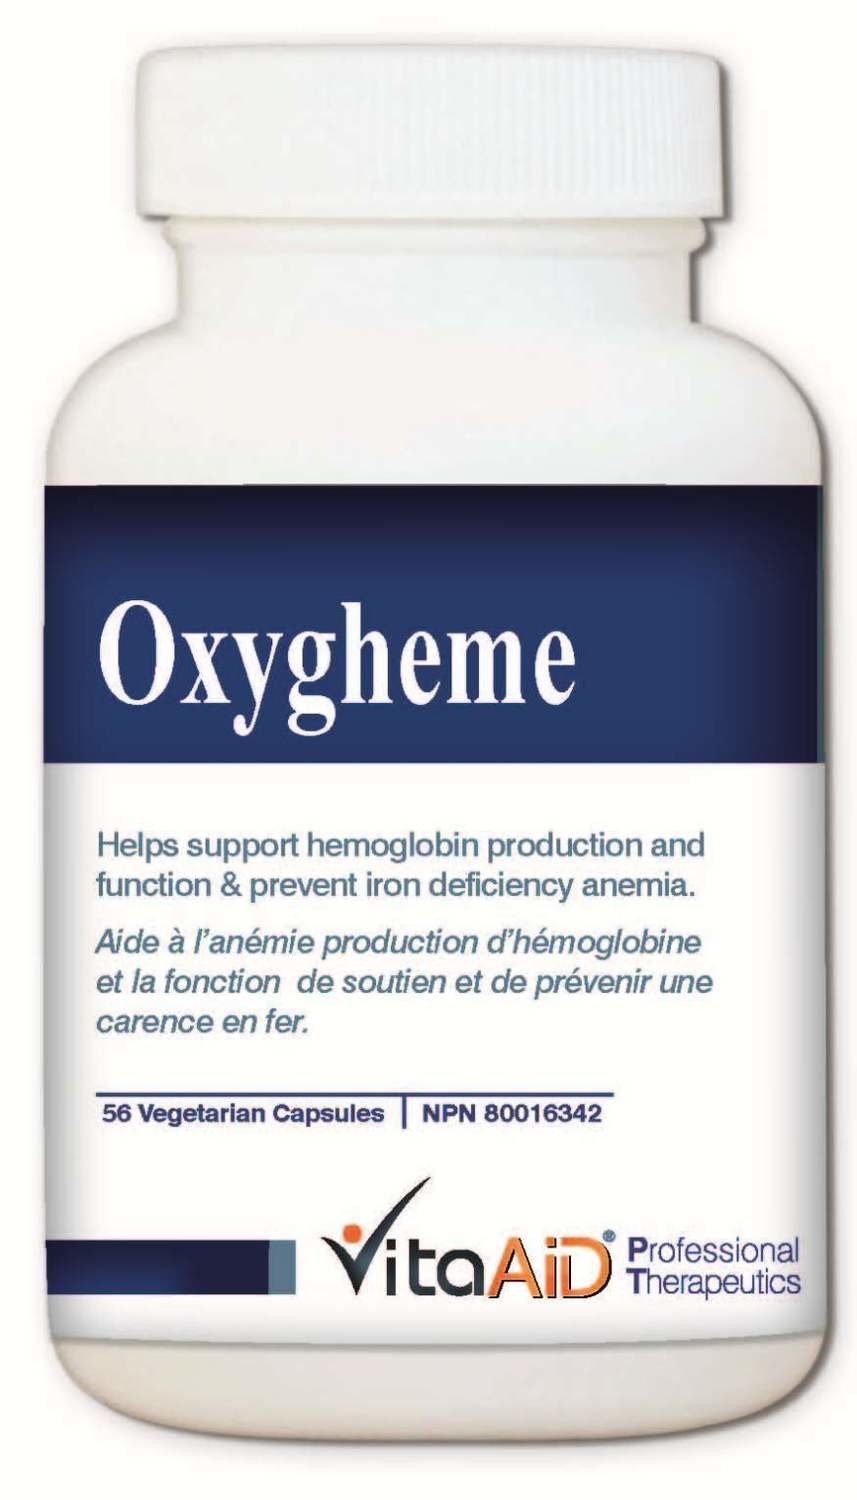 Oxygheme by Vita Aid